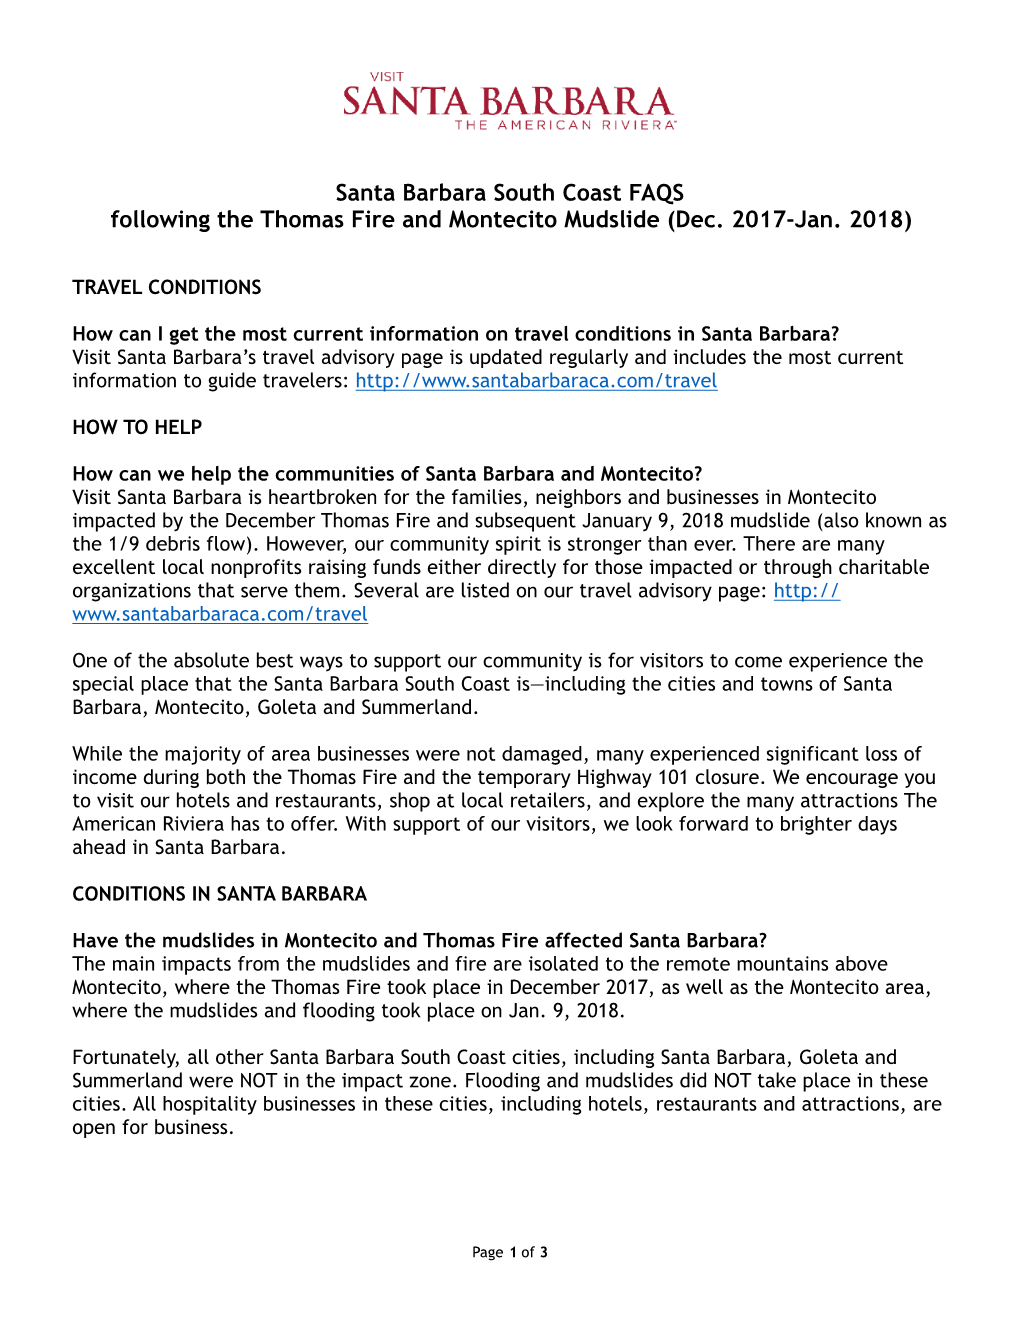 Santa Barbara South Coast FAQS Following the Thomas Fire and Montecito Mudslide (Dec